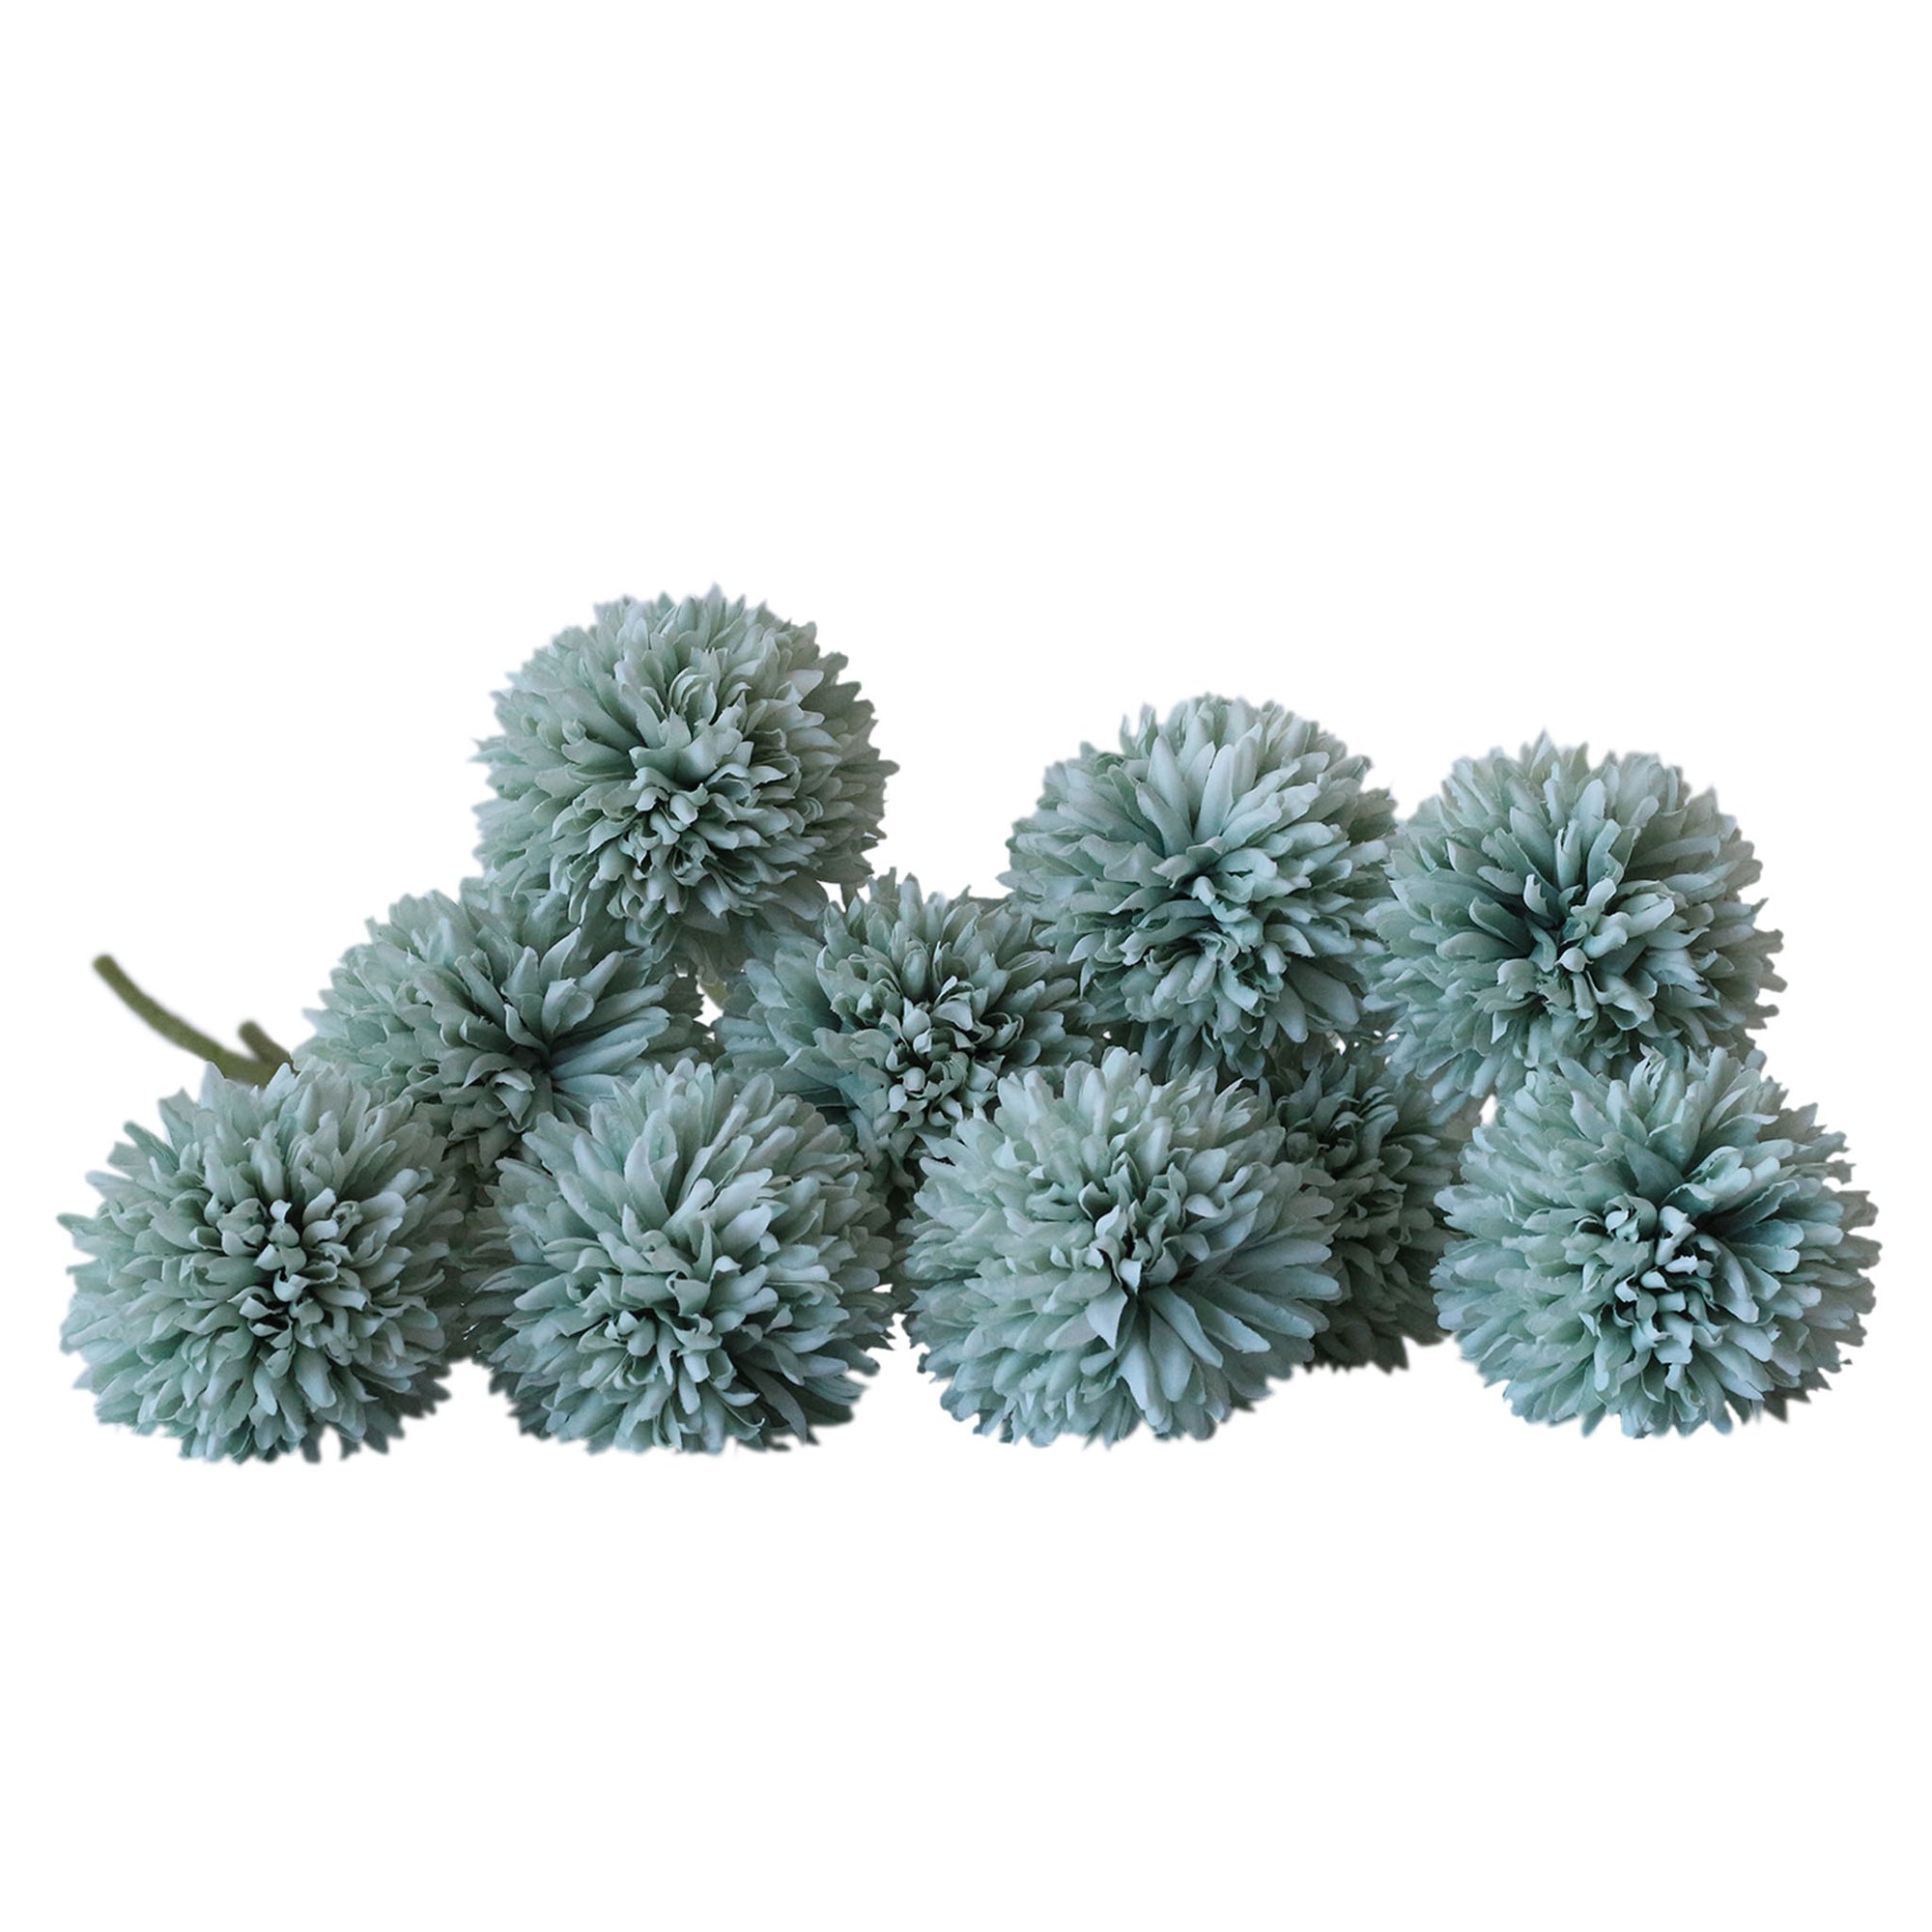 Artificial Chrysanthemum Ball Flowers Small Floral Decor